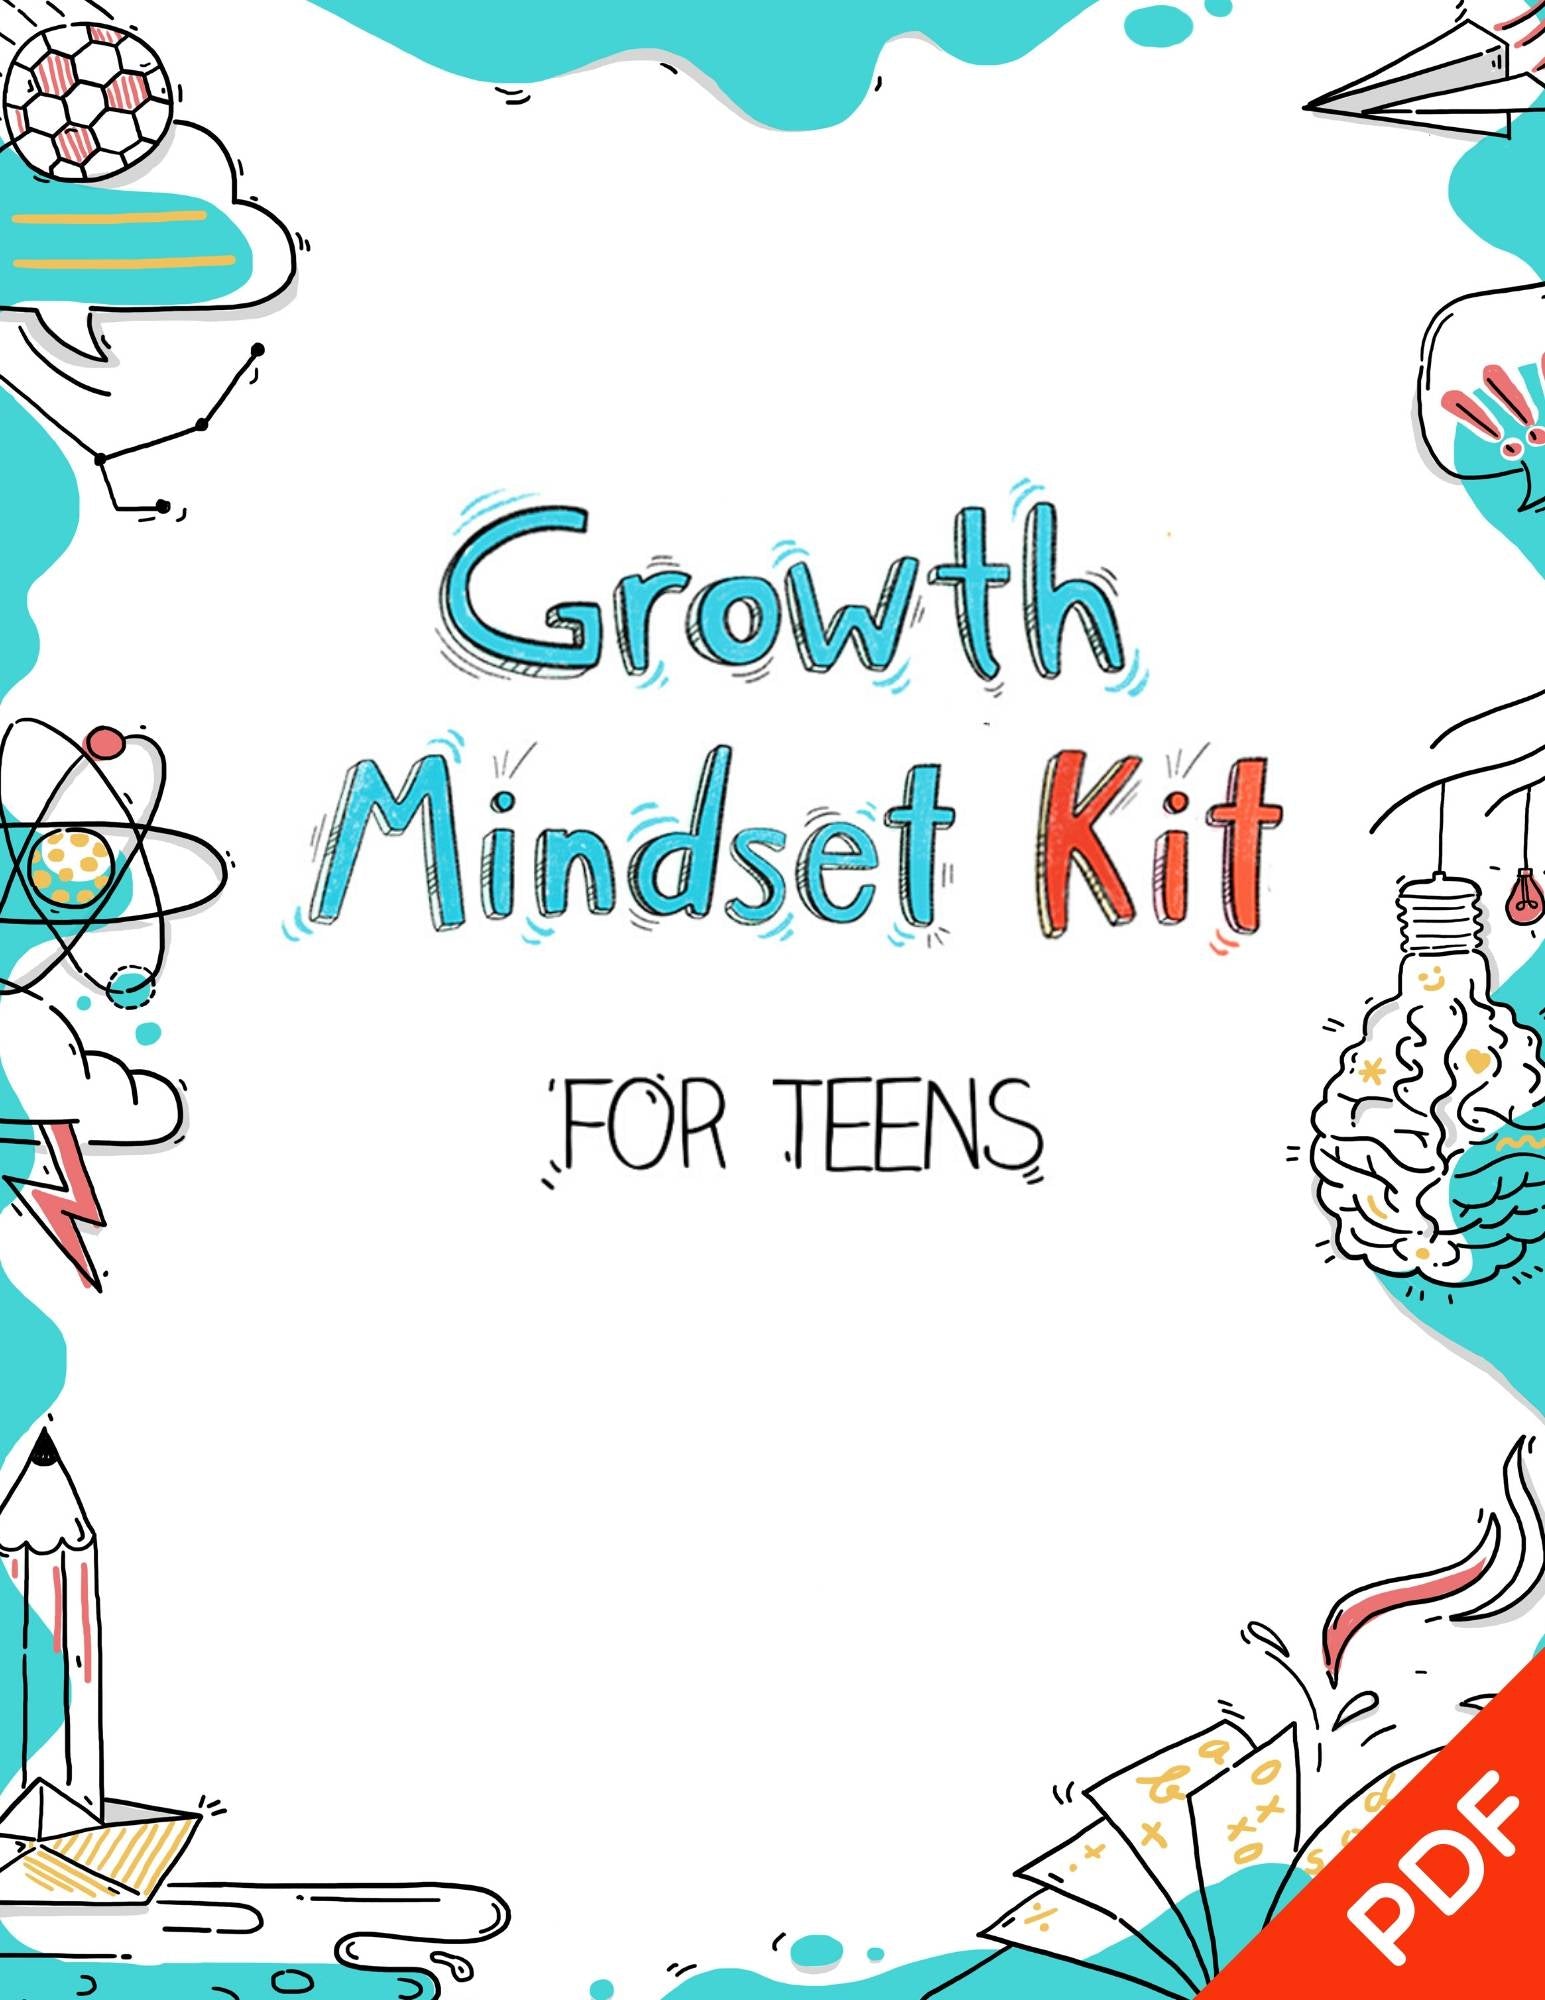 Growth Mindset Resources for Tweens & Teens – Big Life Journal